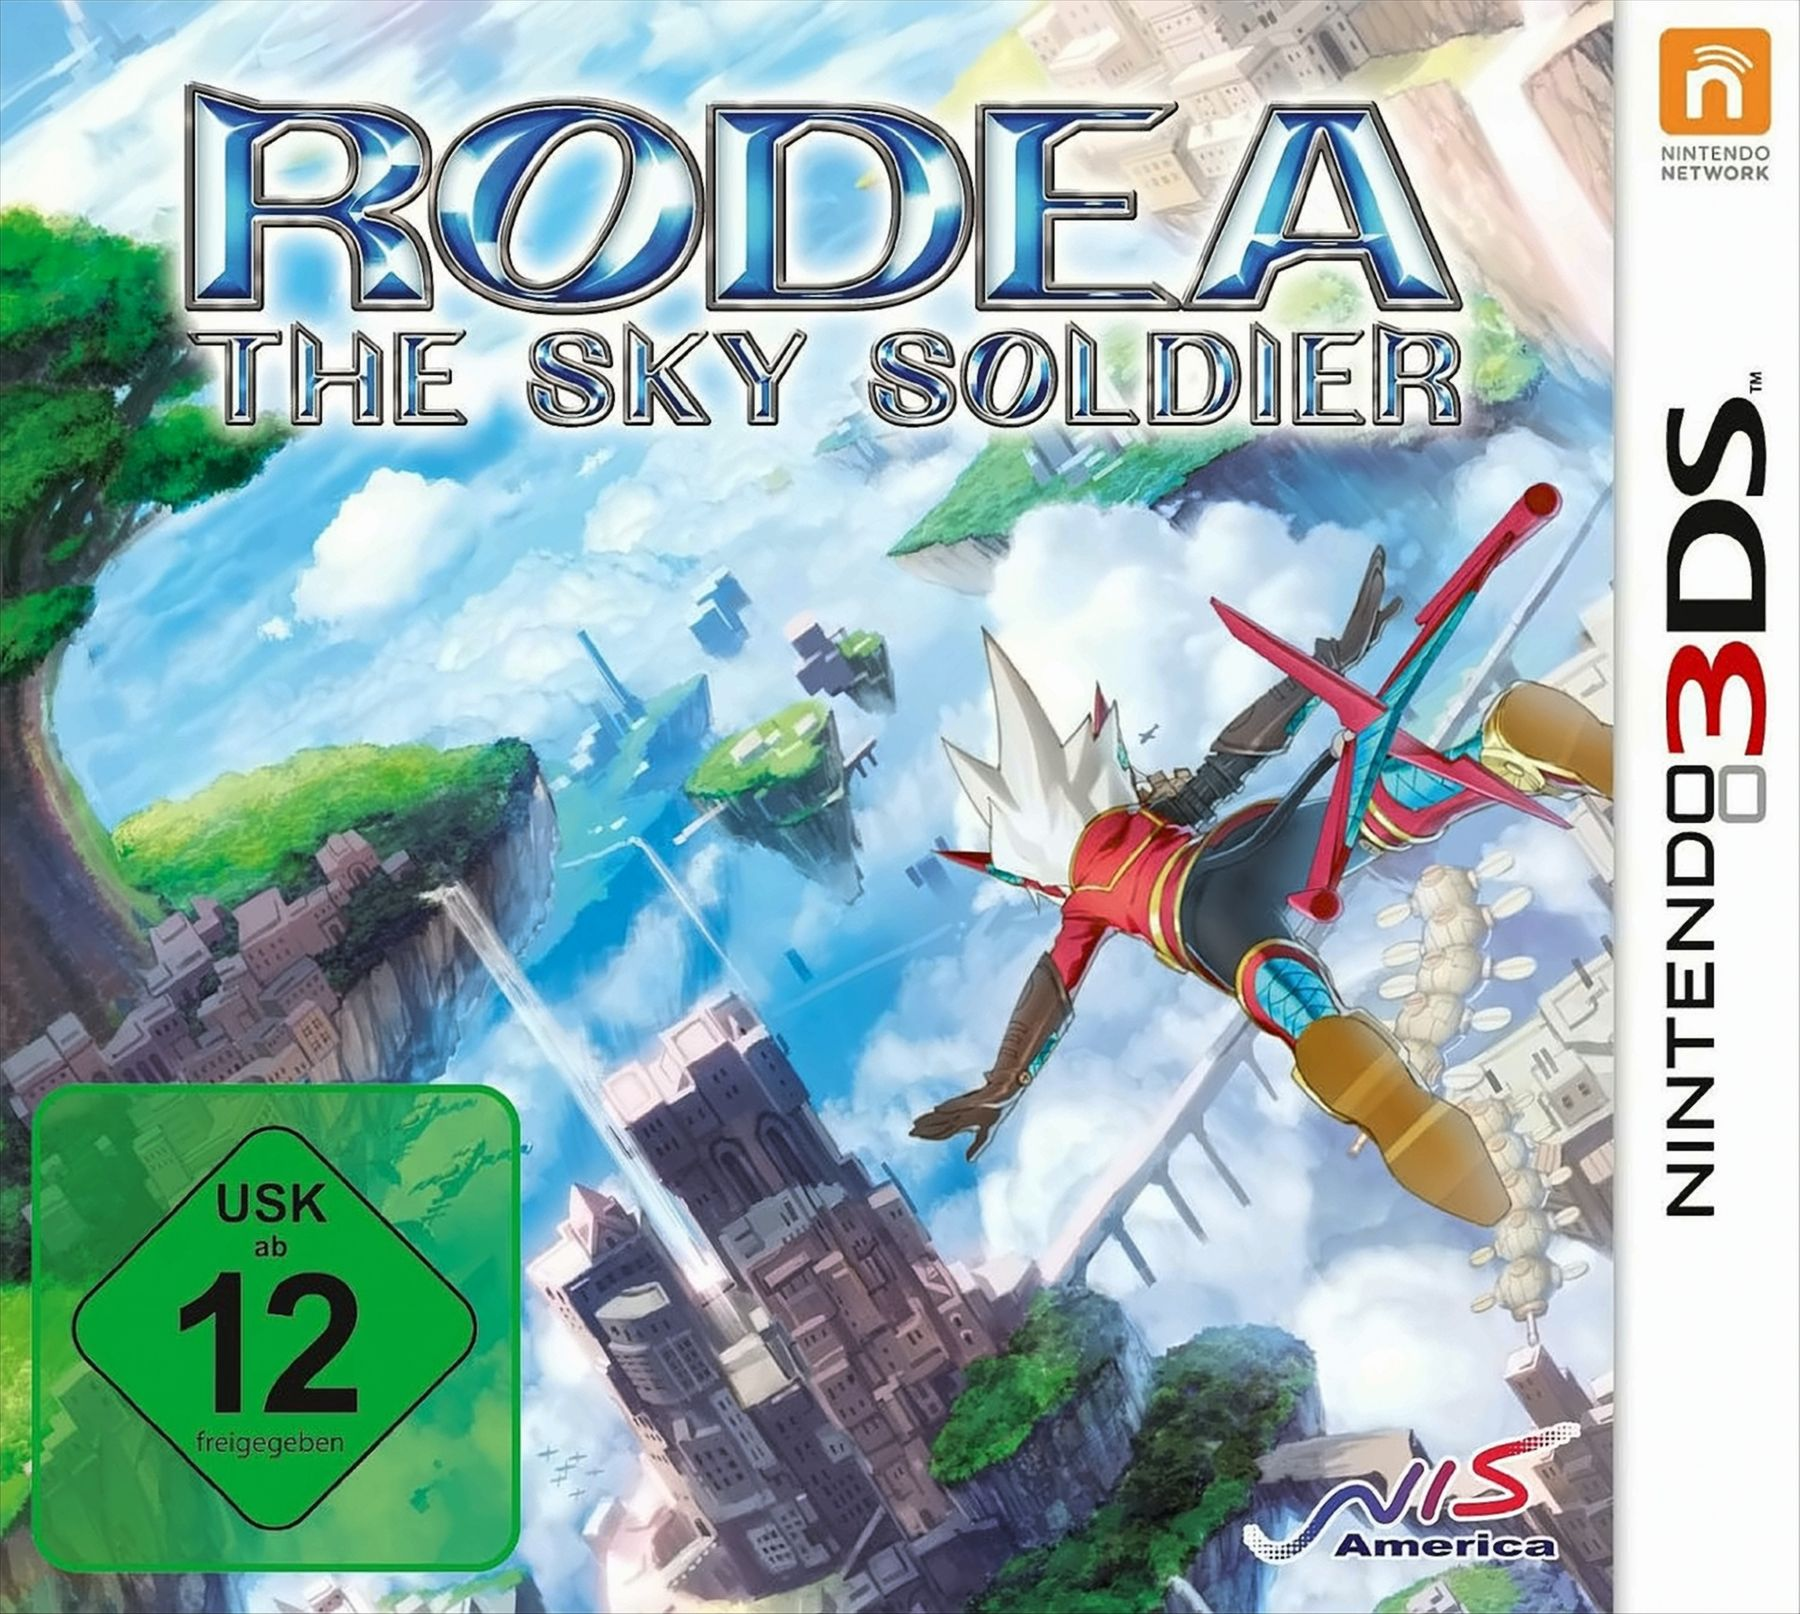 3DS] Rodea Soldier The [Nintendo - Sky